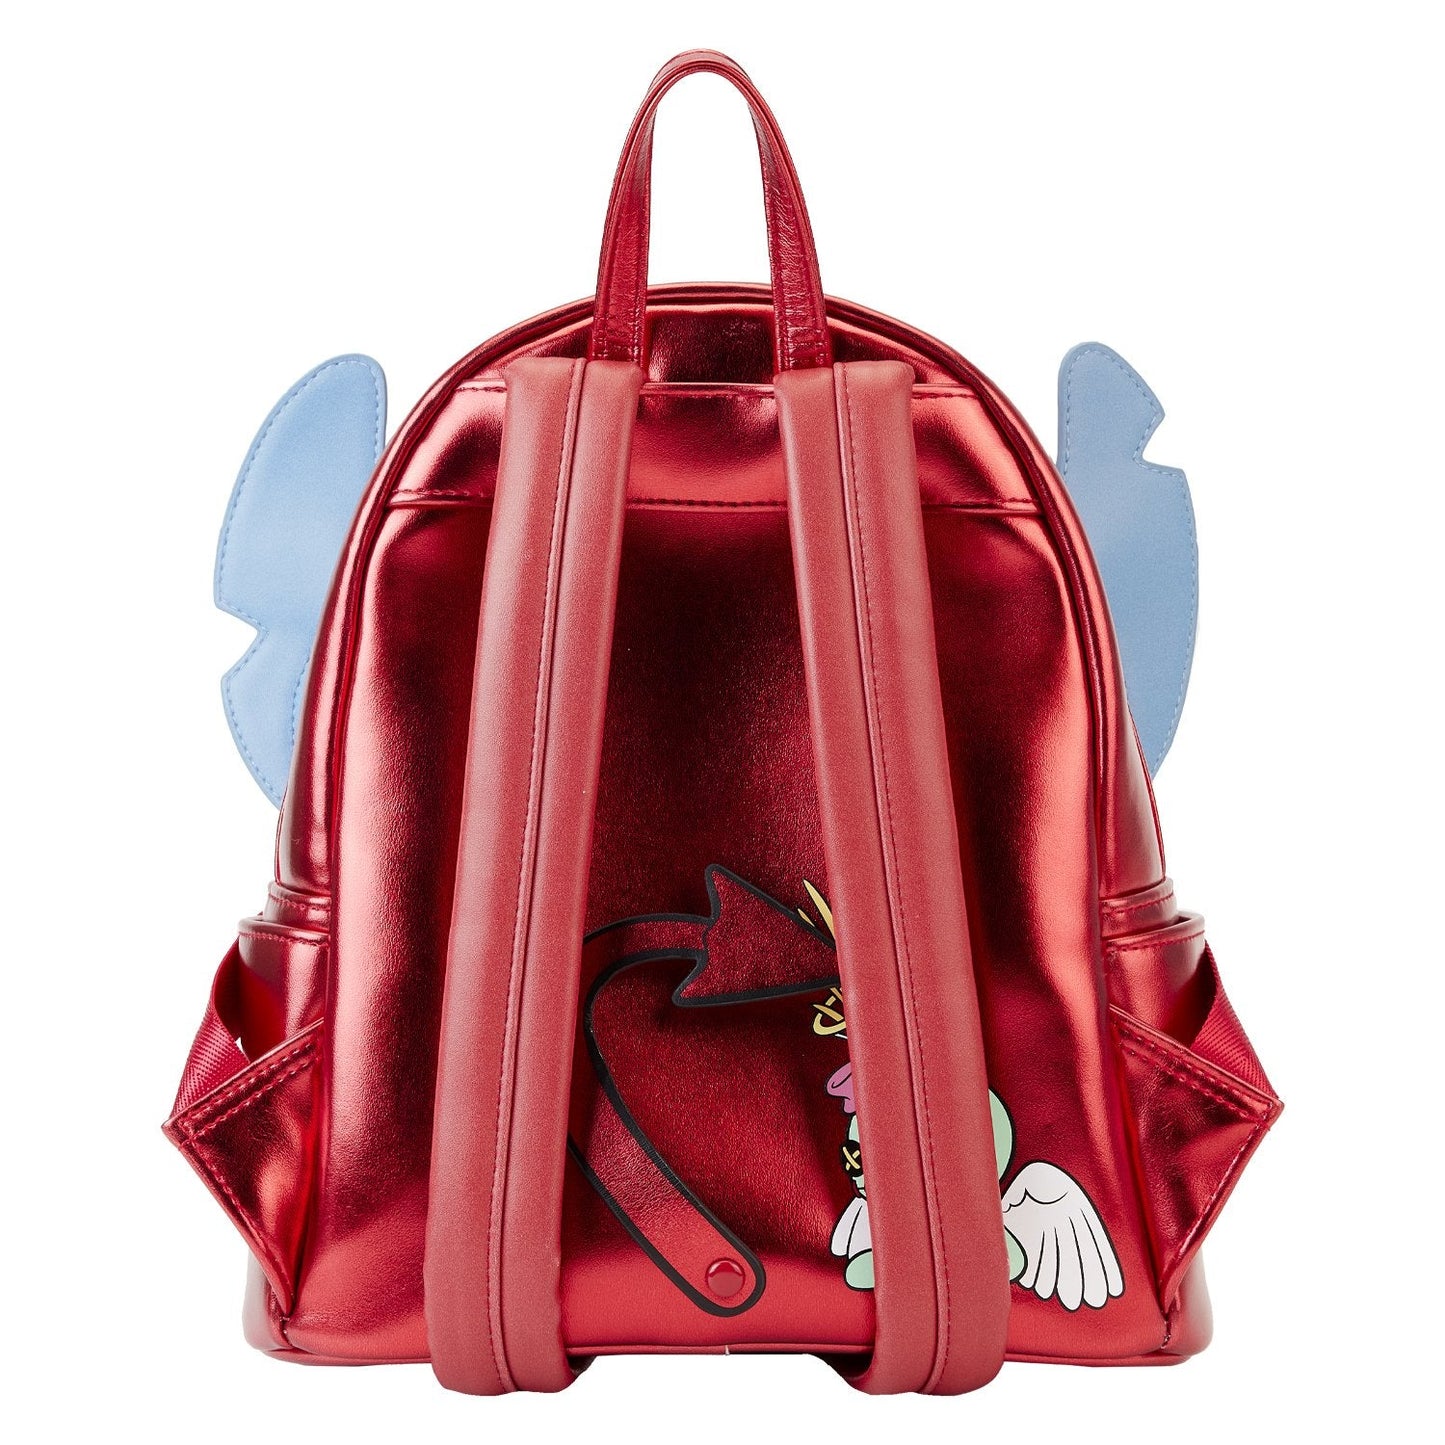 Stitch Devil cosplay mini backpack